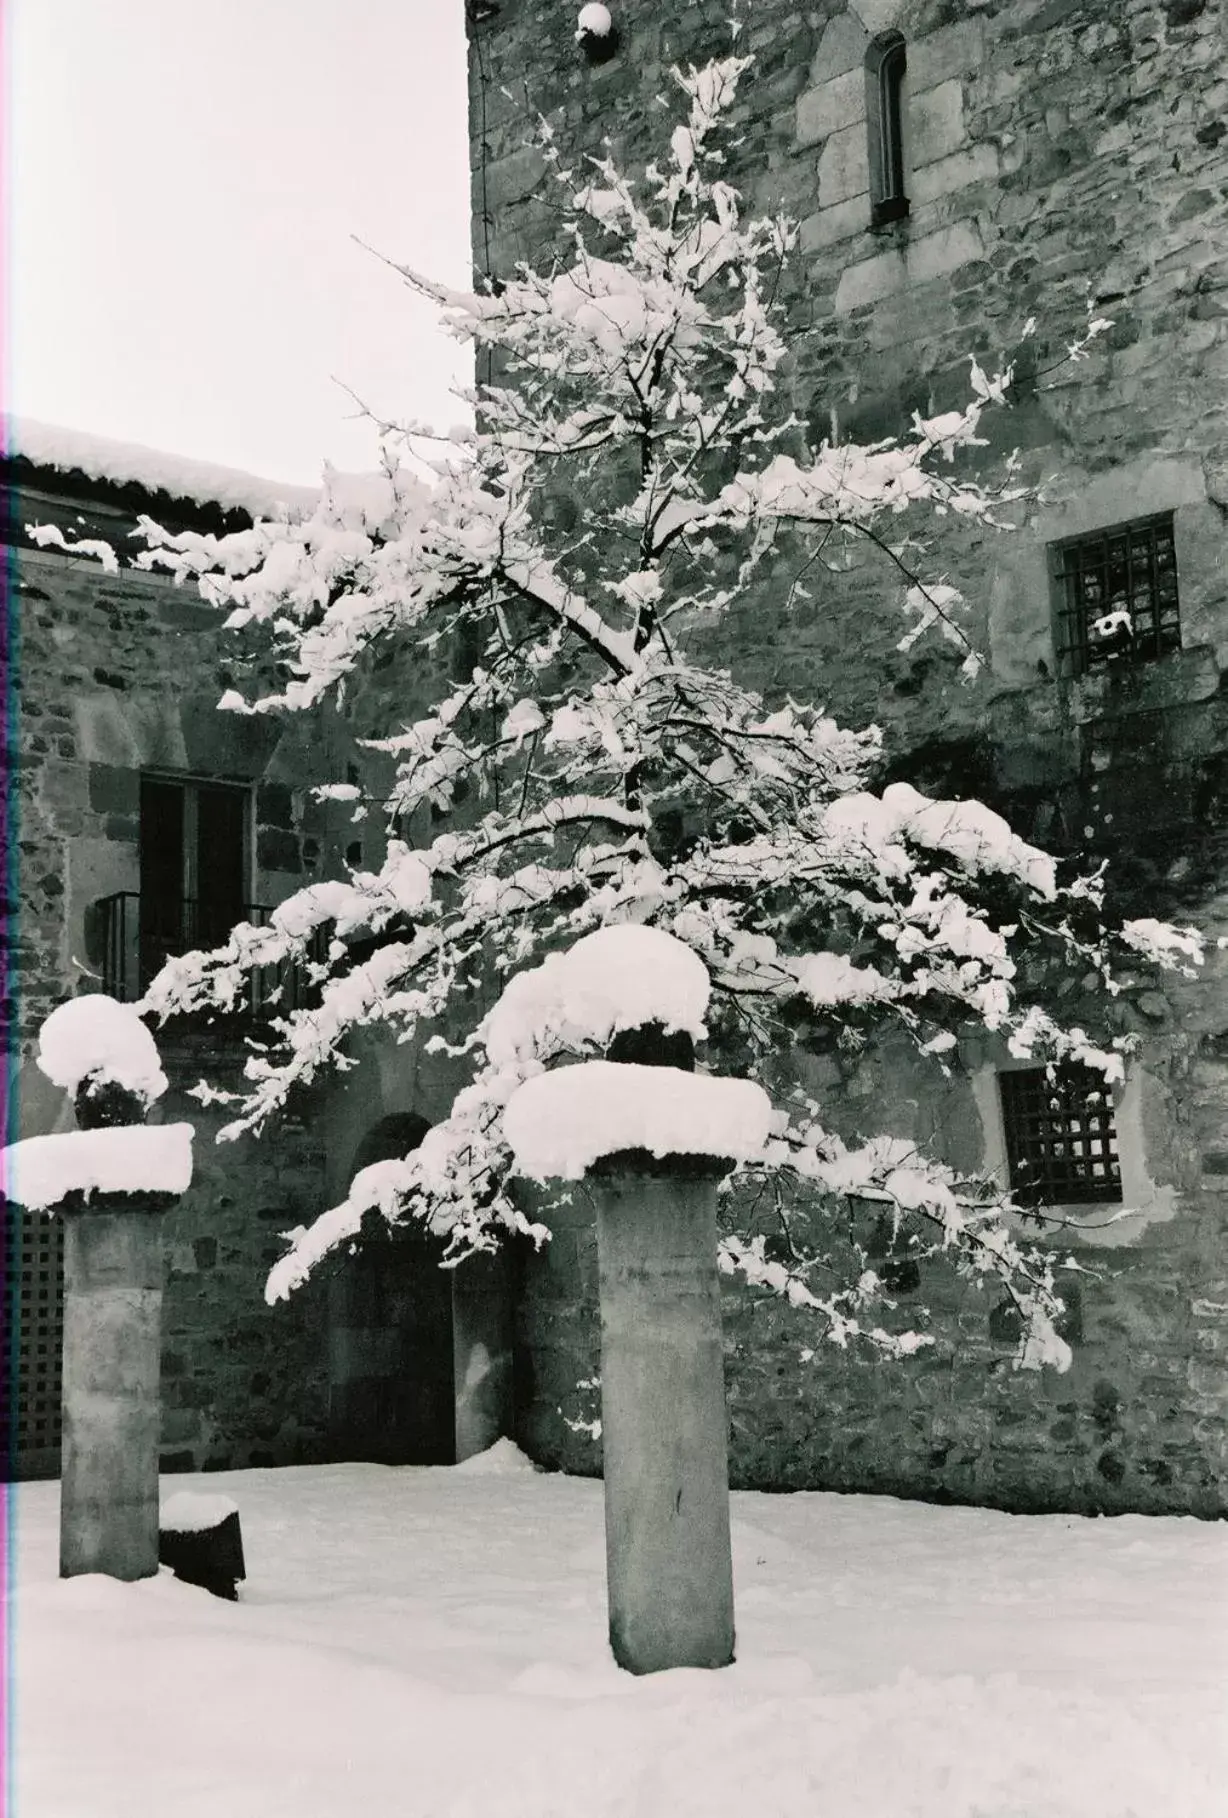 Winter in Batzarki